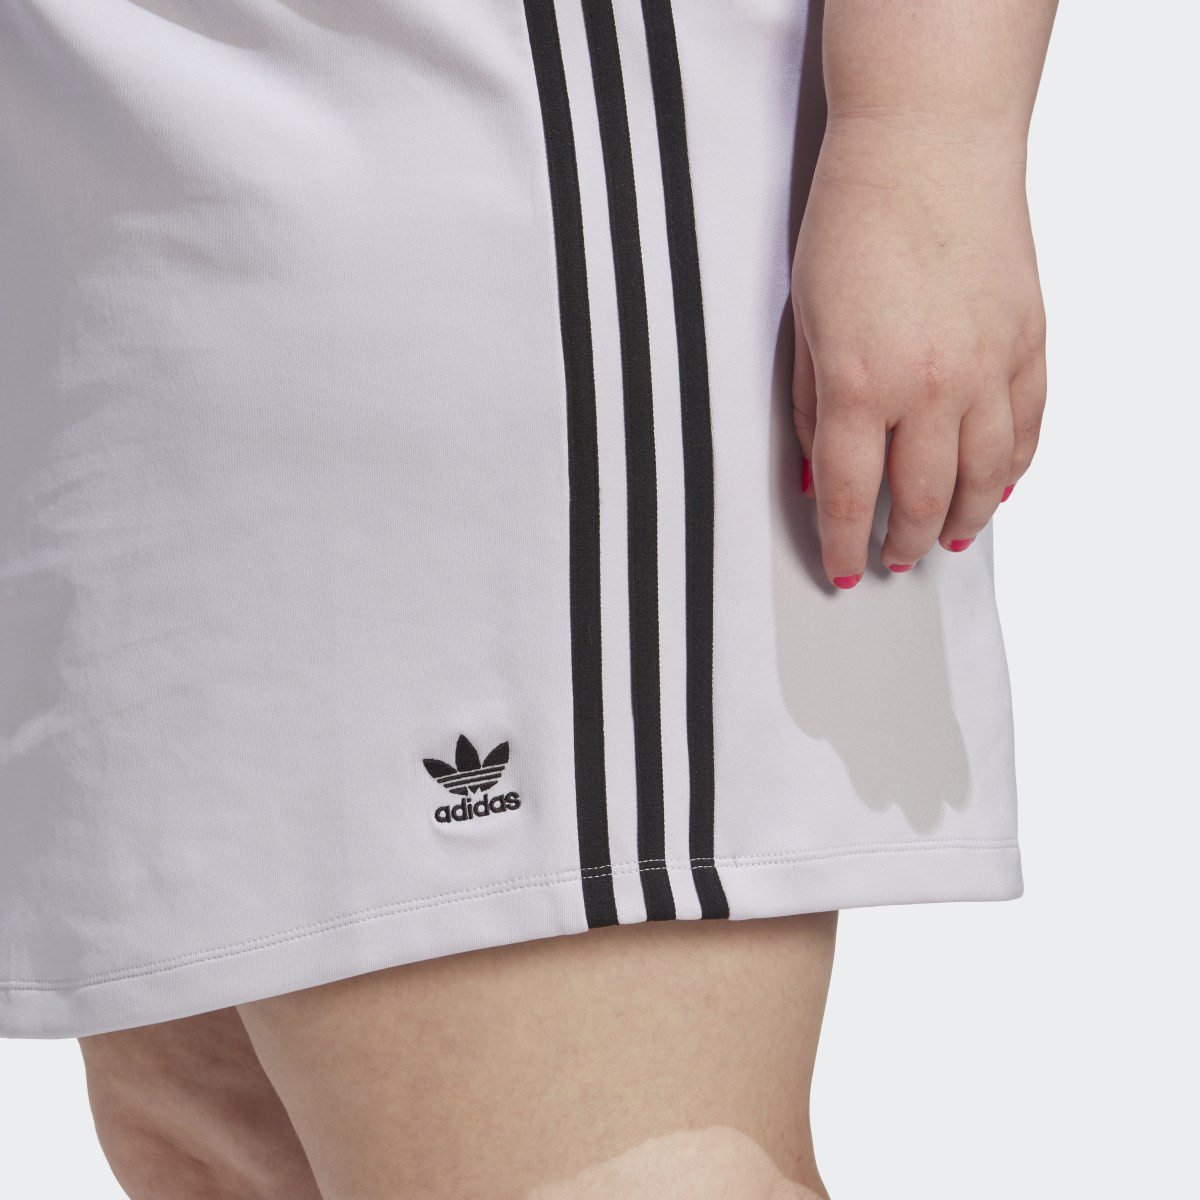 Adidas Always Original Skirt (Plus Size). 6